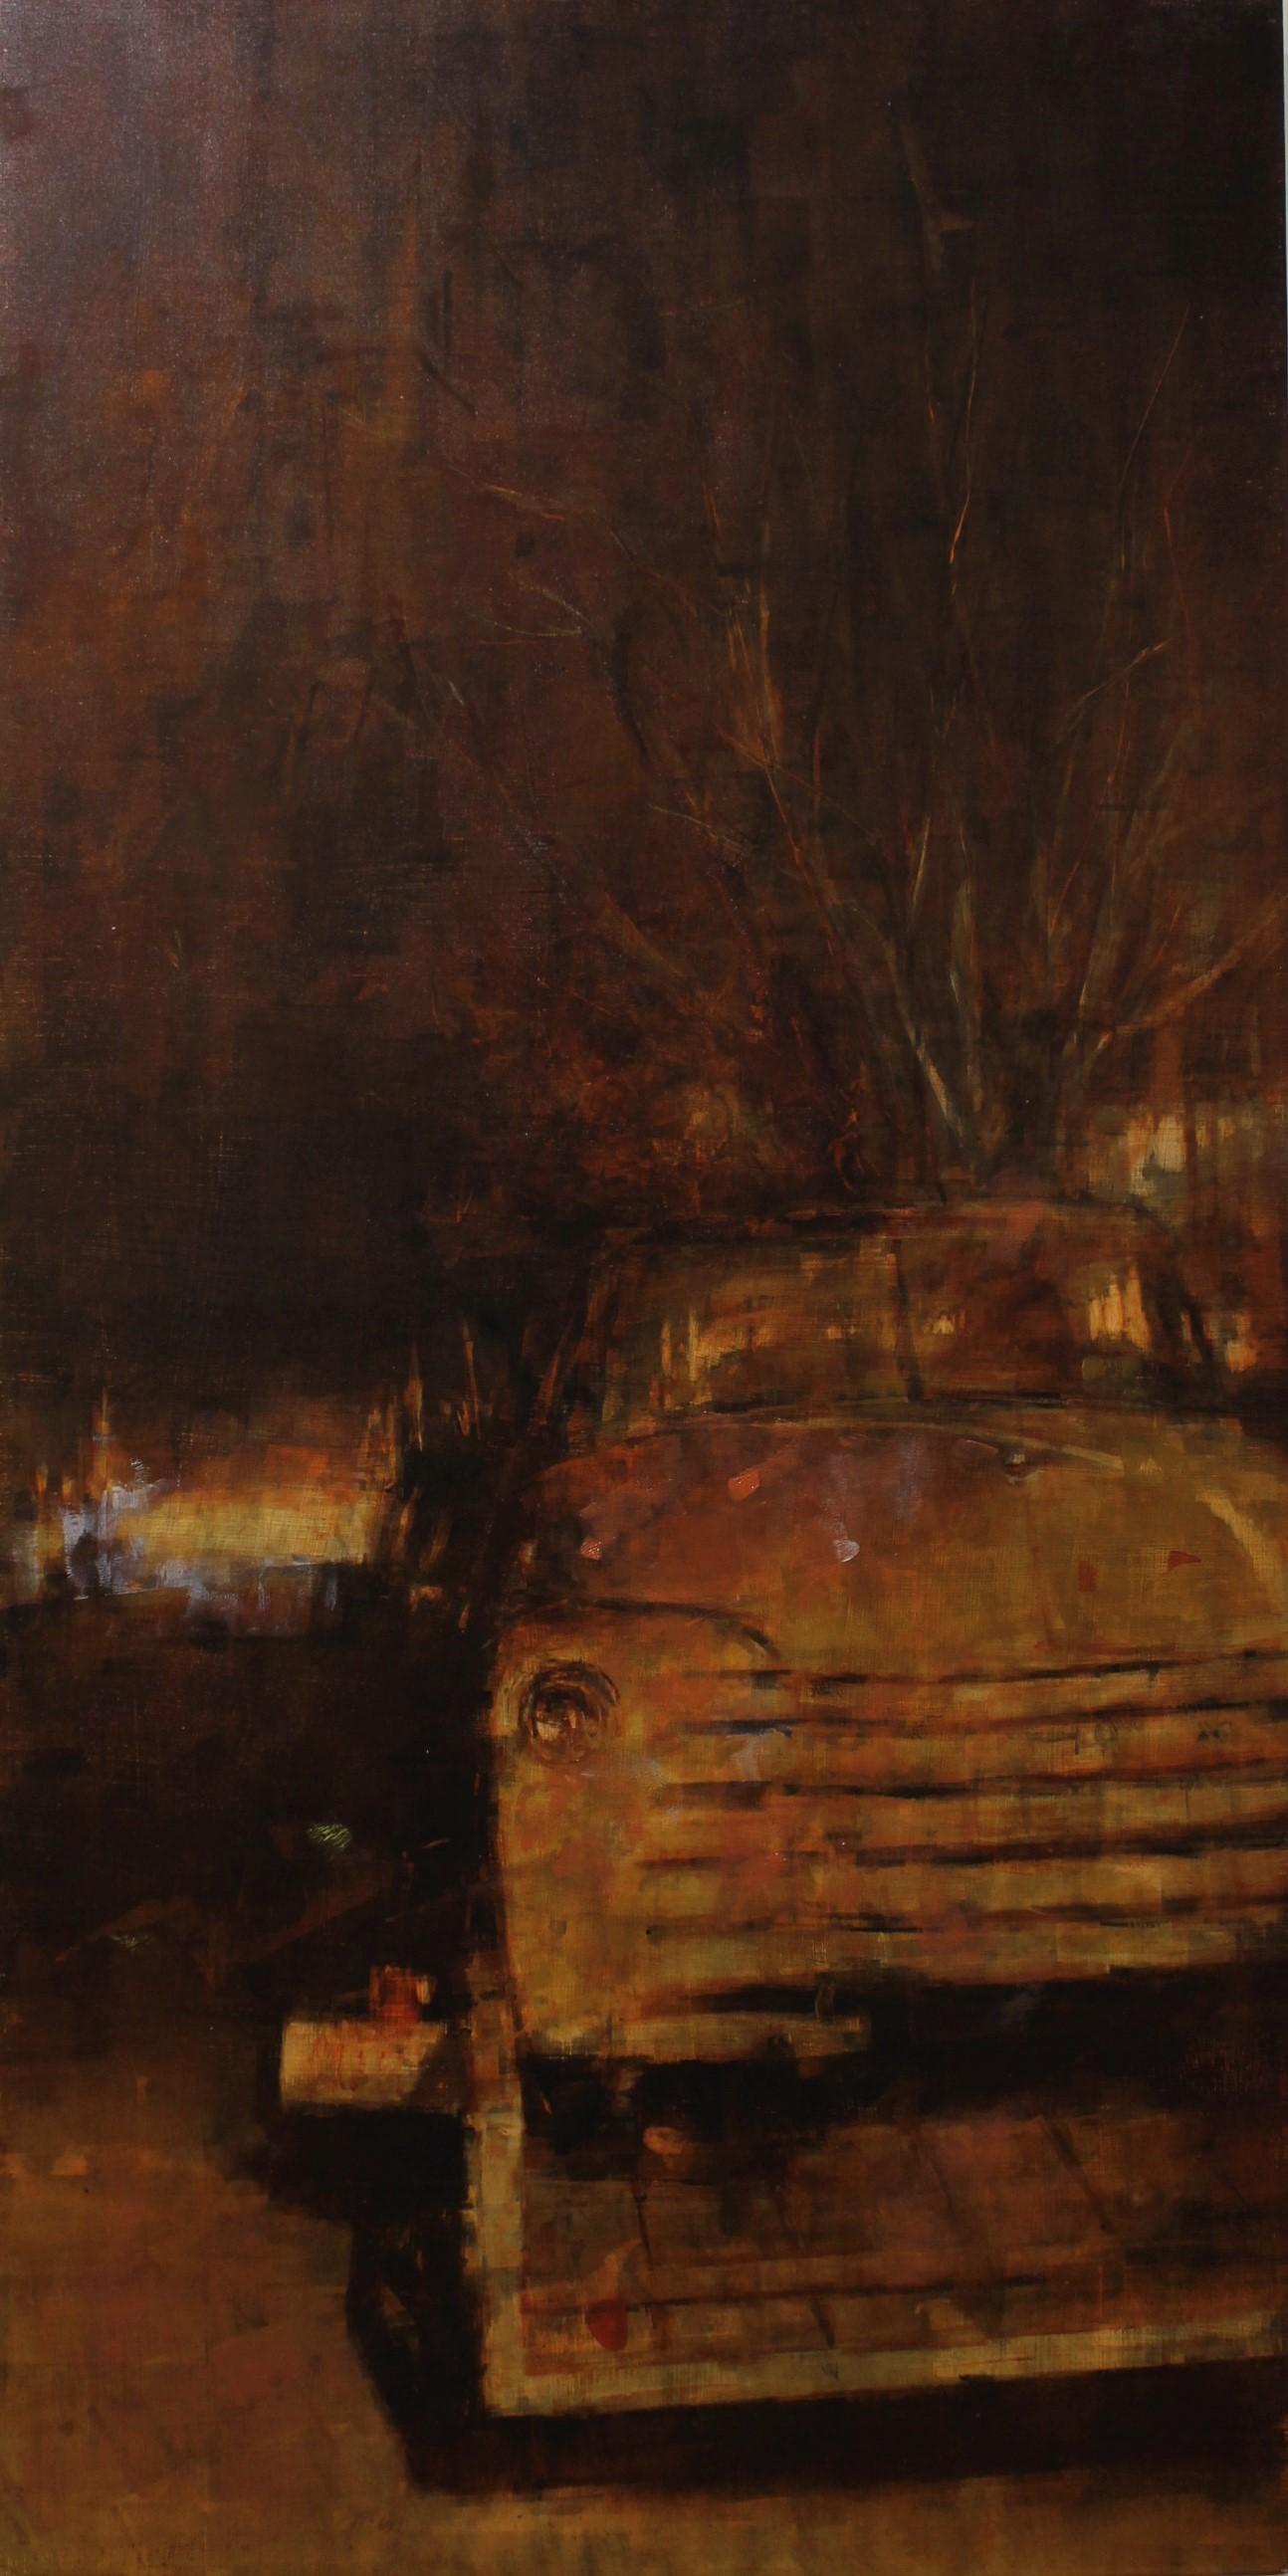 Rust Never Sleeps - Painting by Kaori Maeyama